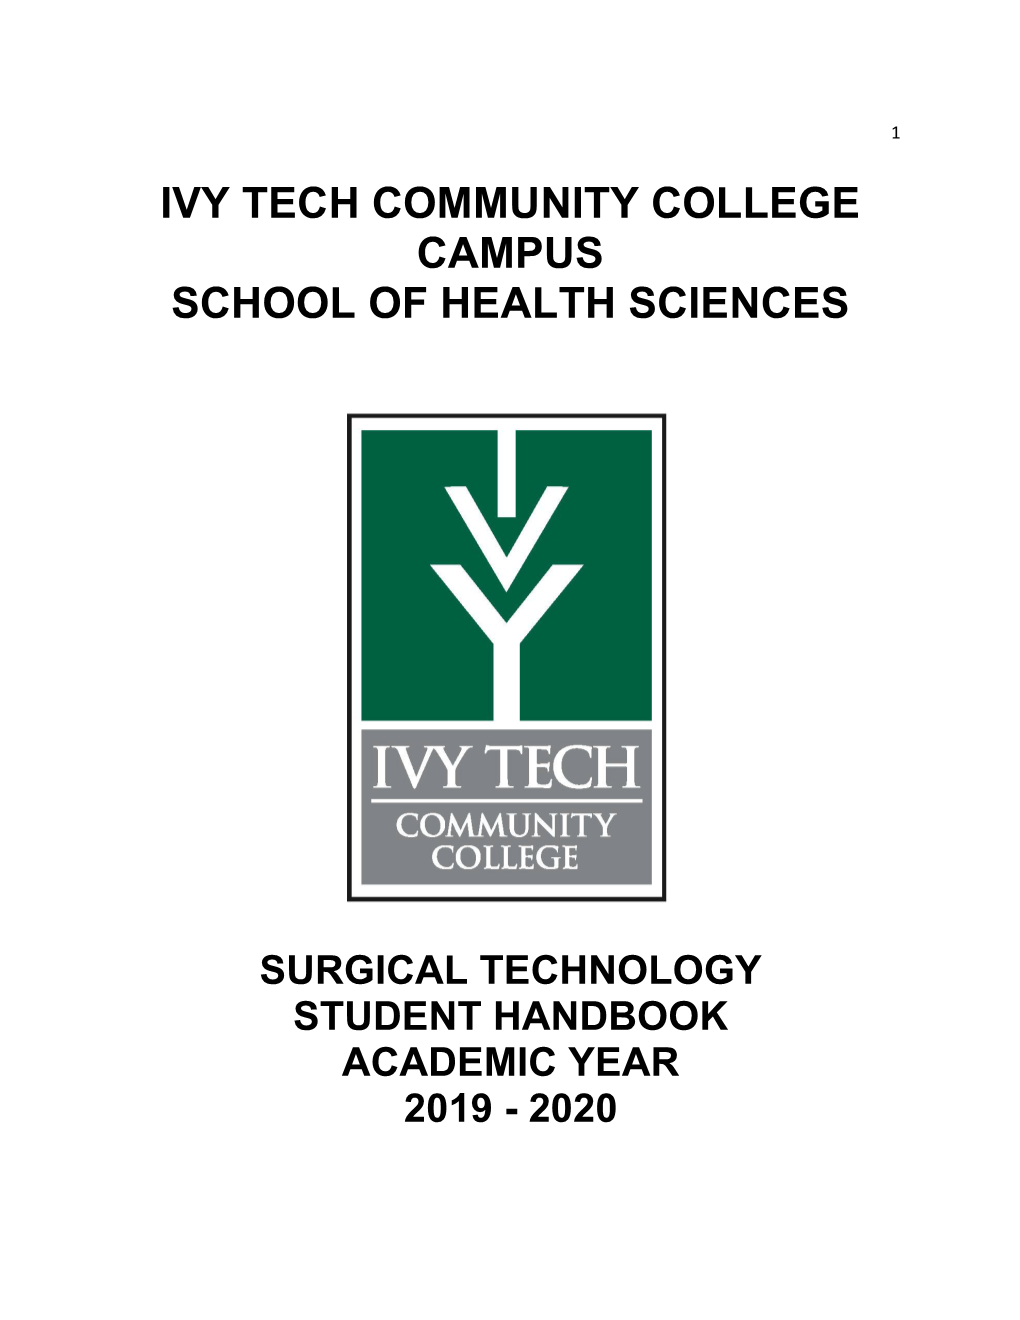 Surgical Technology Student Handbook Academic Year 2019 - 2020 2